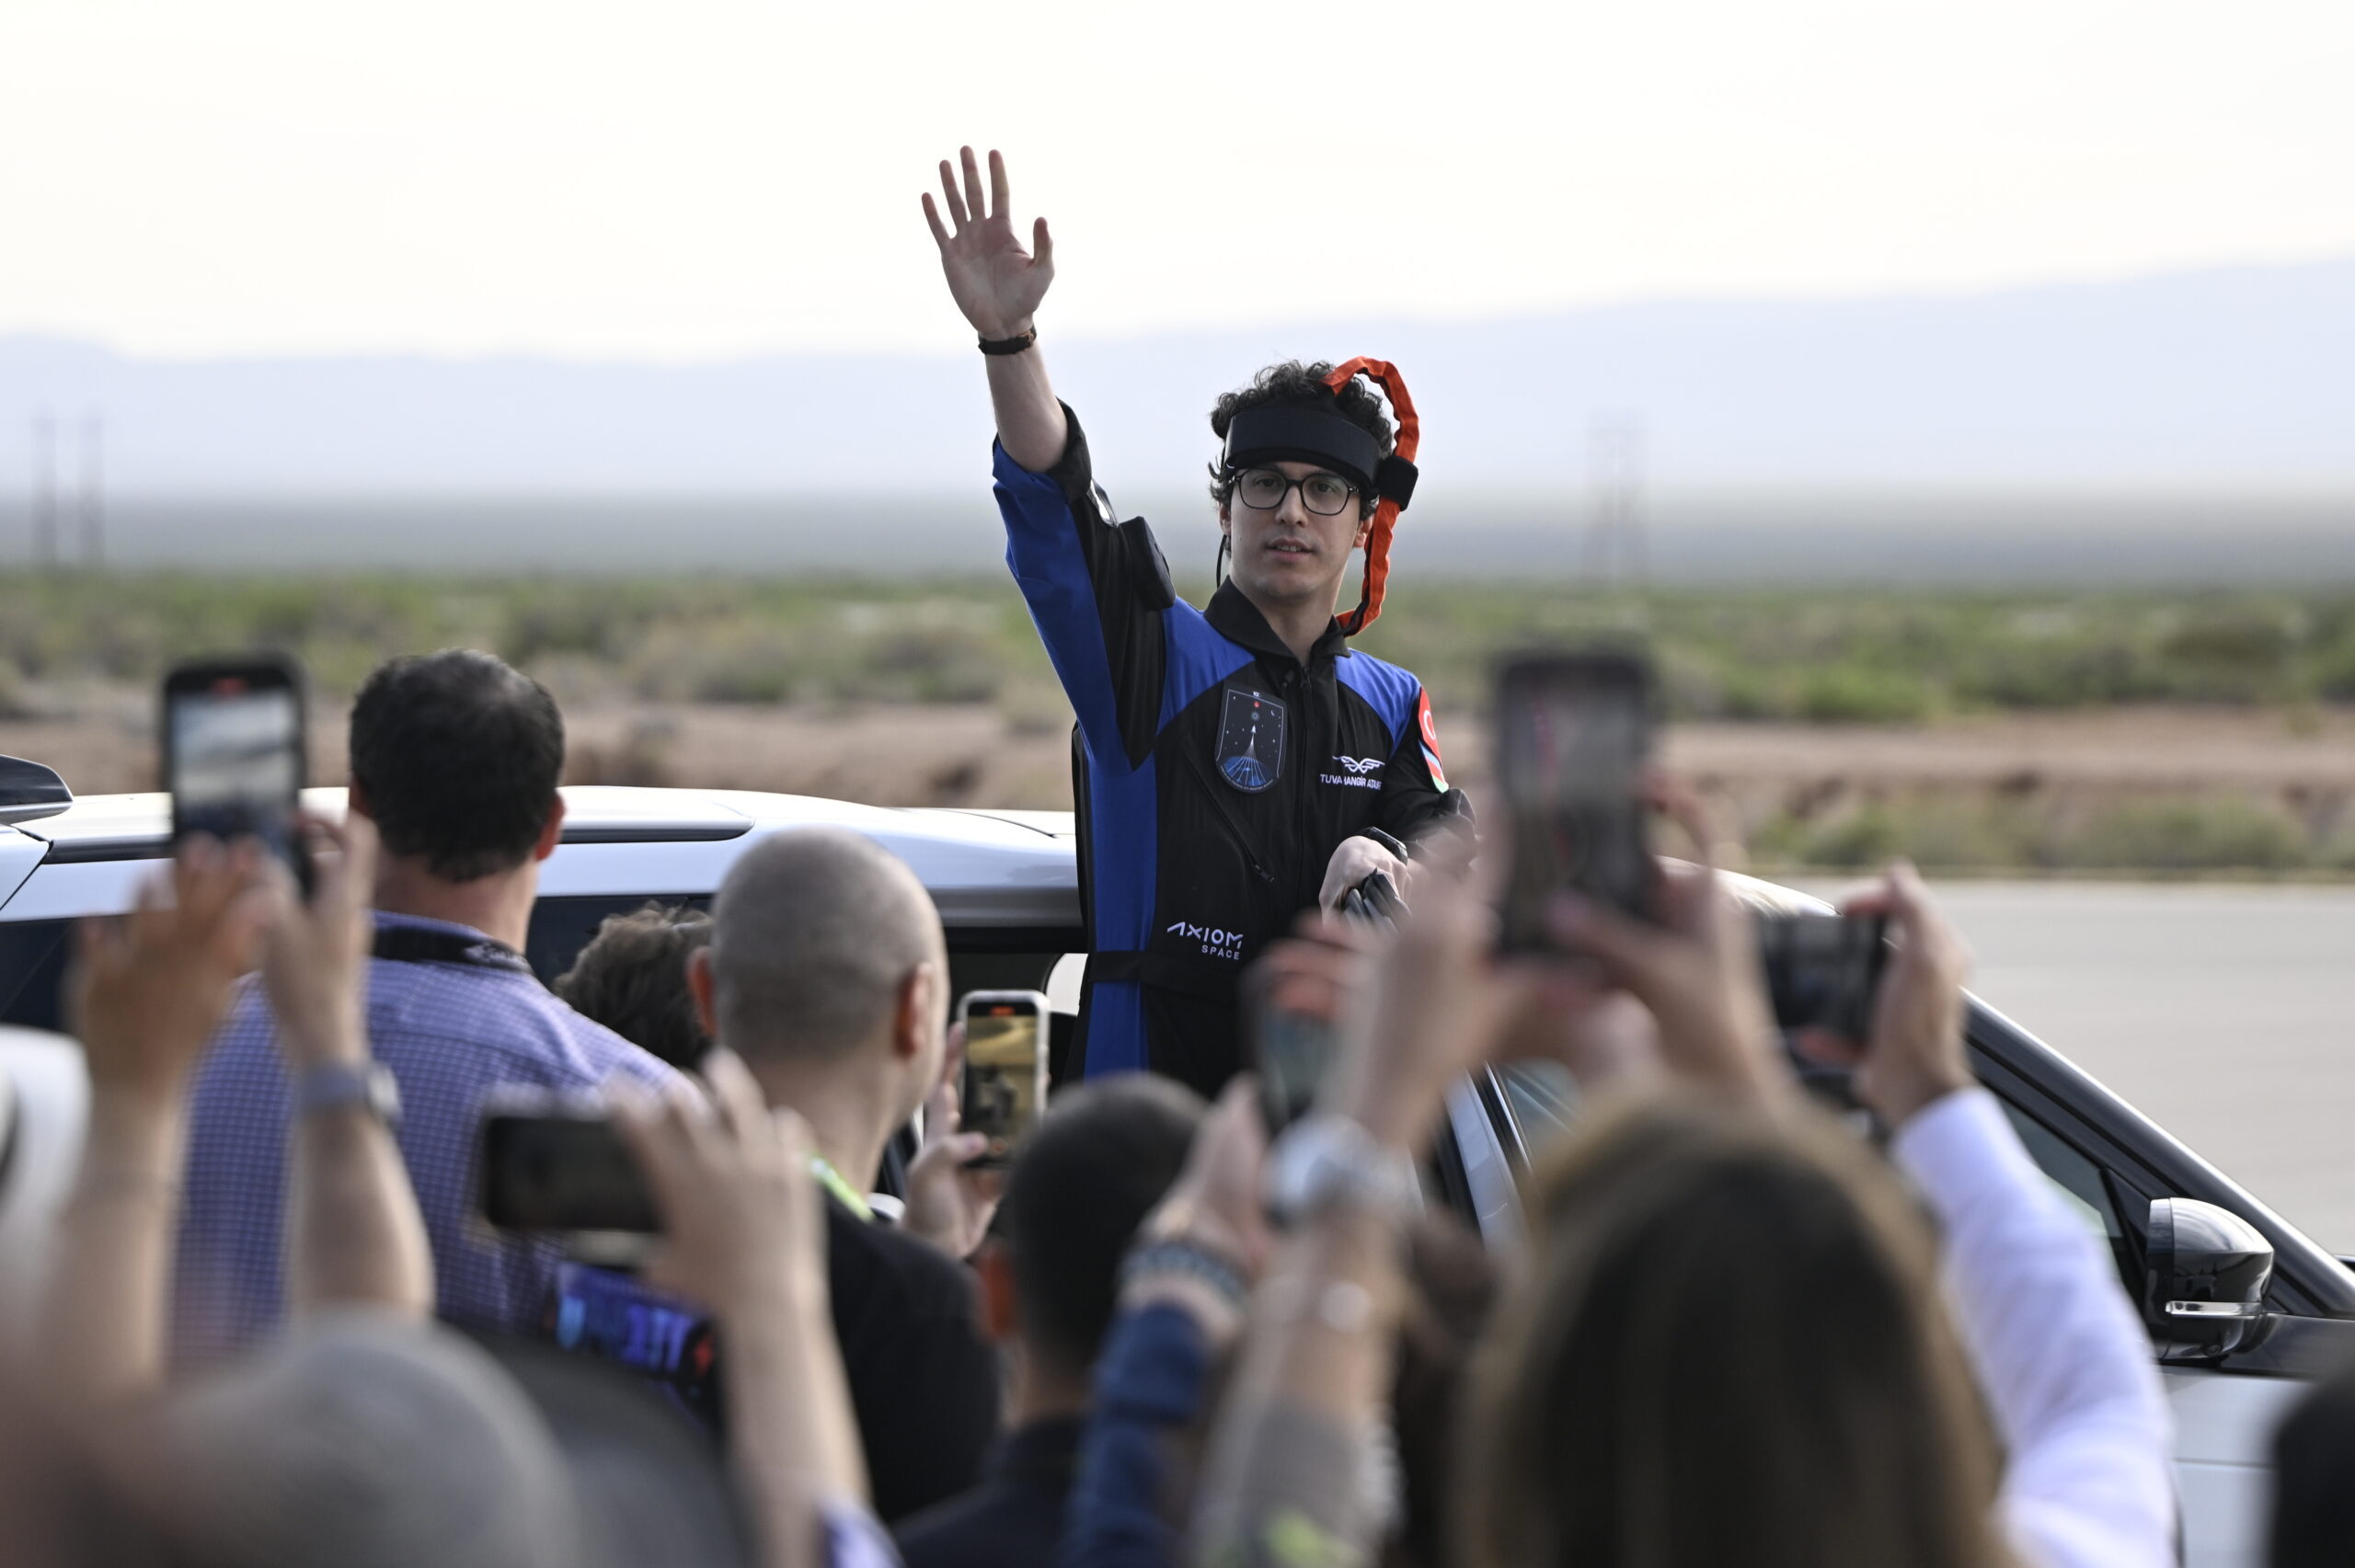 Türkiye's 2nd astronaut Atasever embarks on historic journey into space